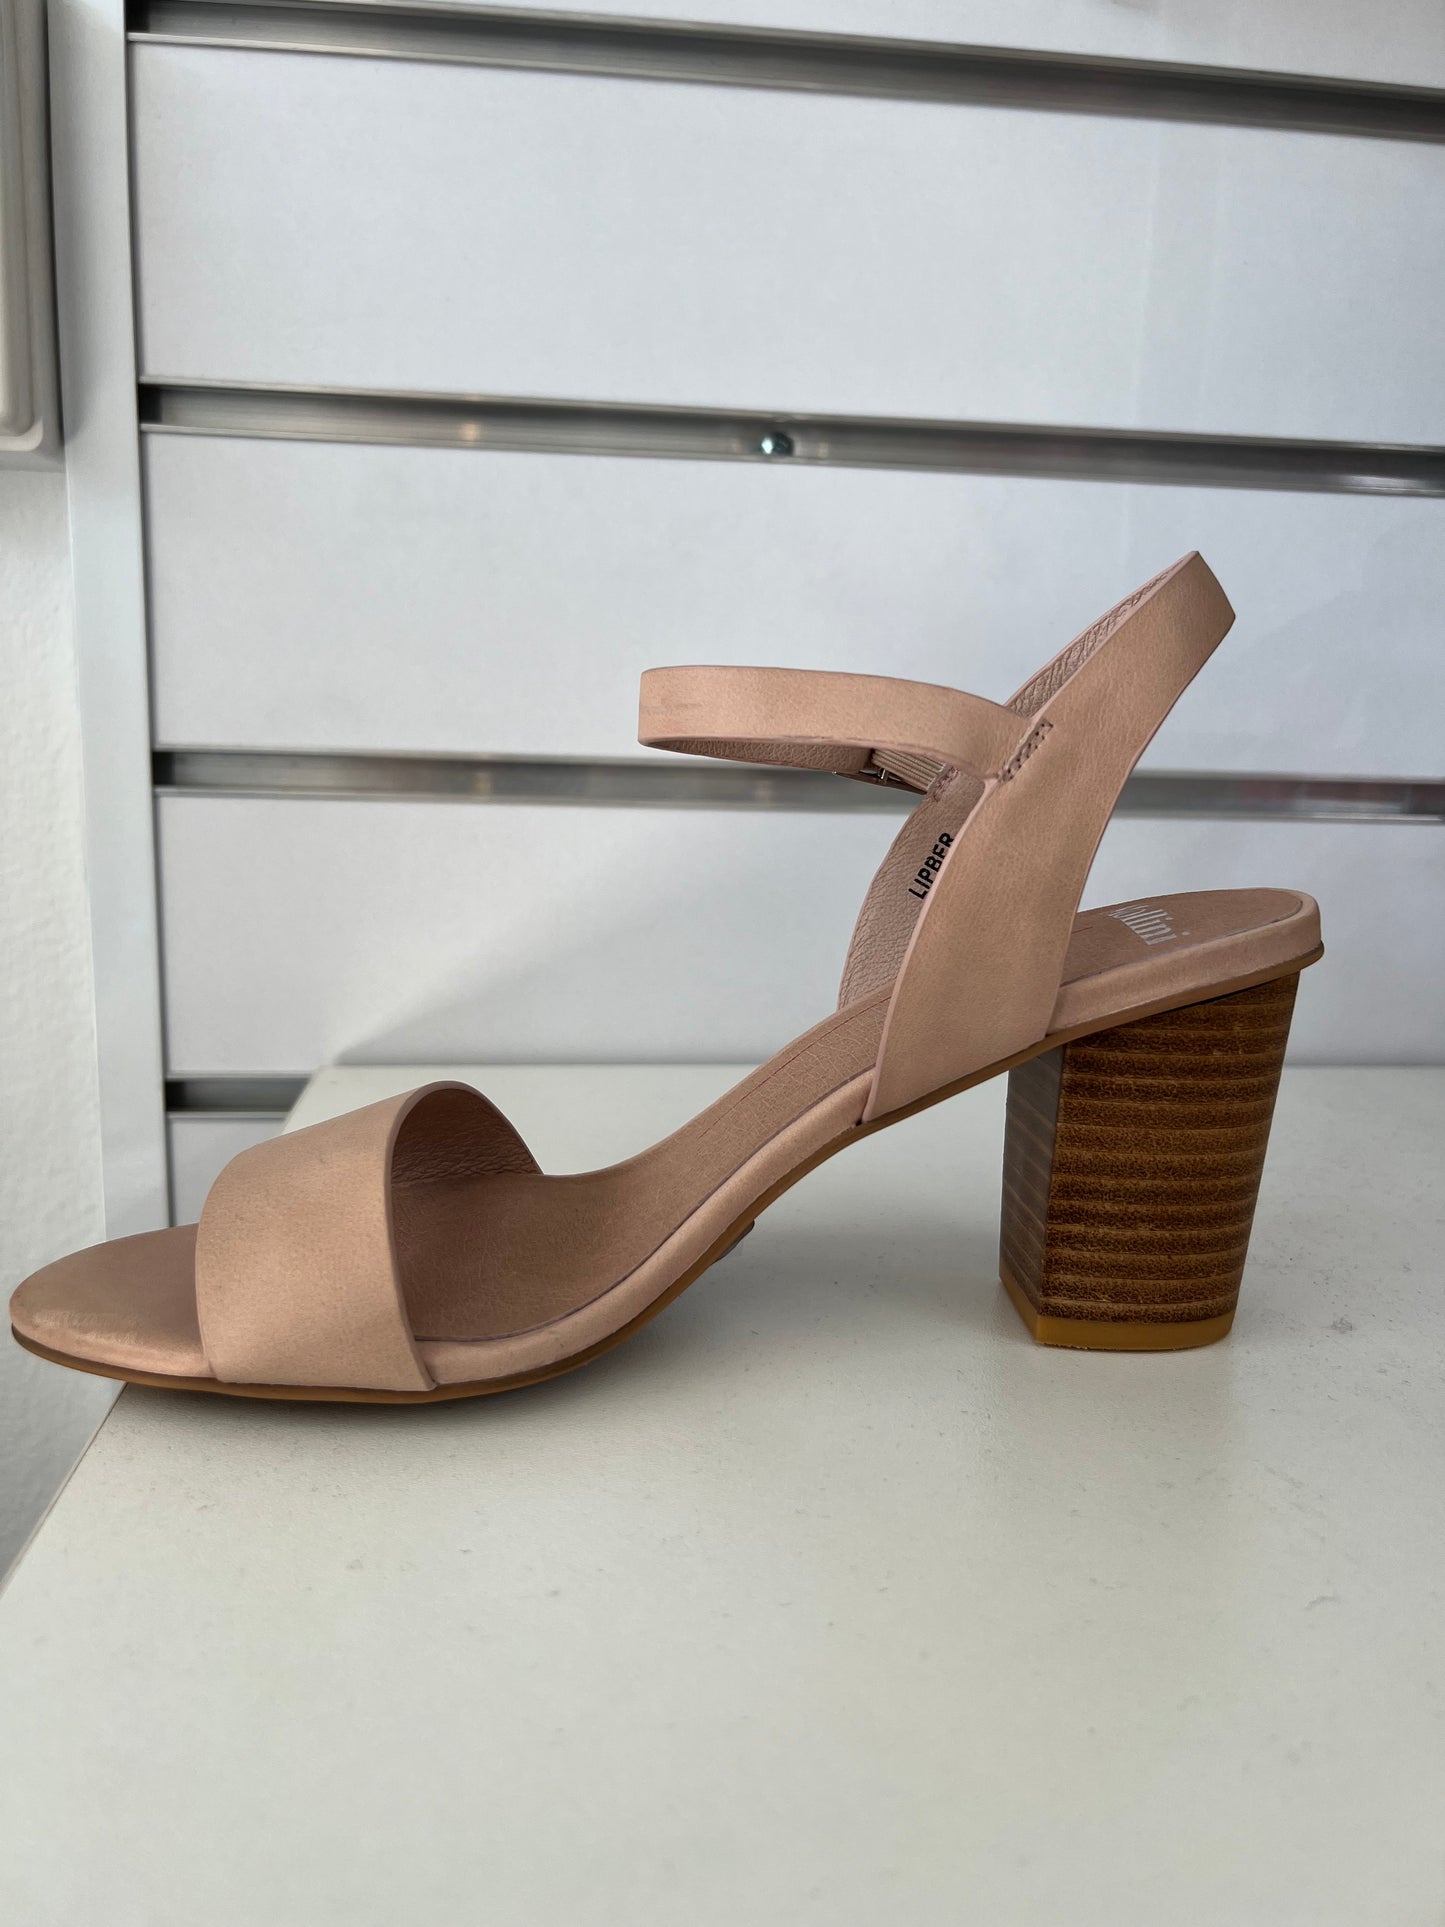 LIPBER BLOCK HEEL - MOLLINI - 36, 37, 38, 39, 40, 41, BLACK, block heel, Nude, womens footwear - Stomp Shoes Darwin